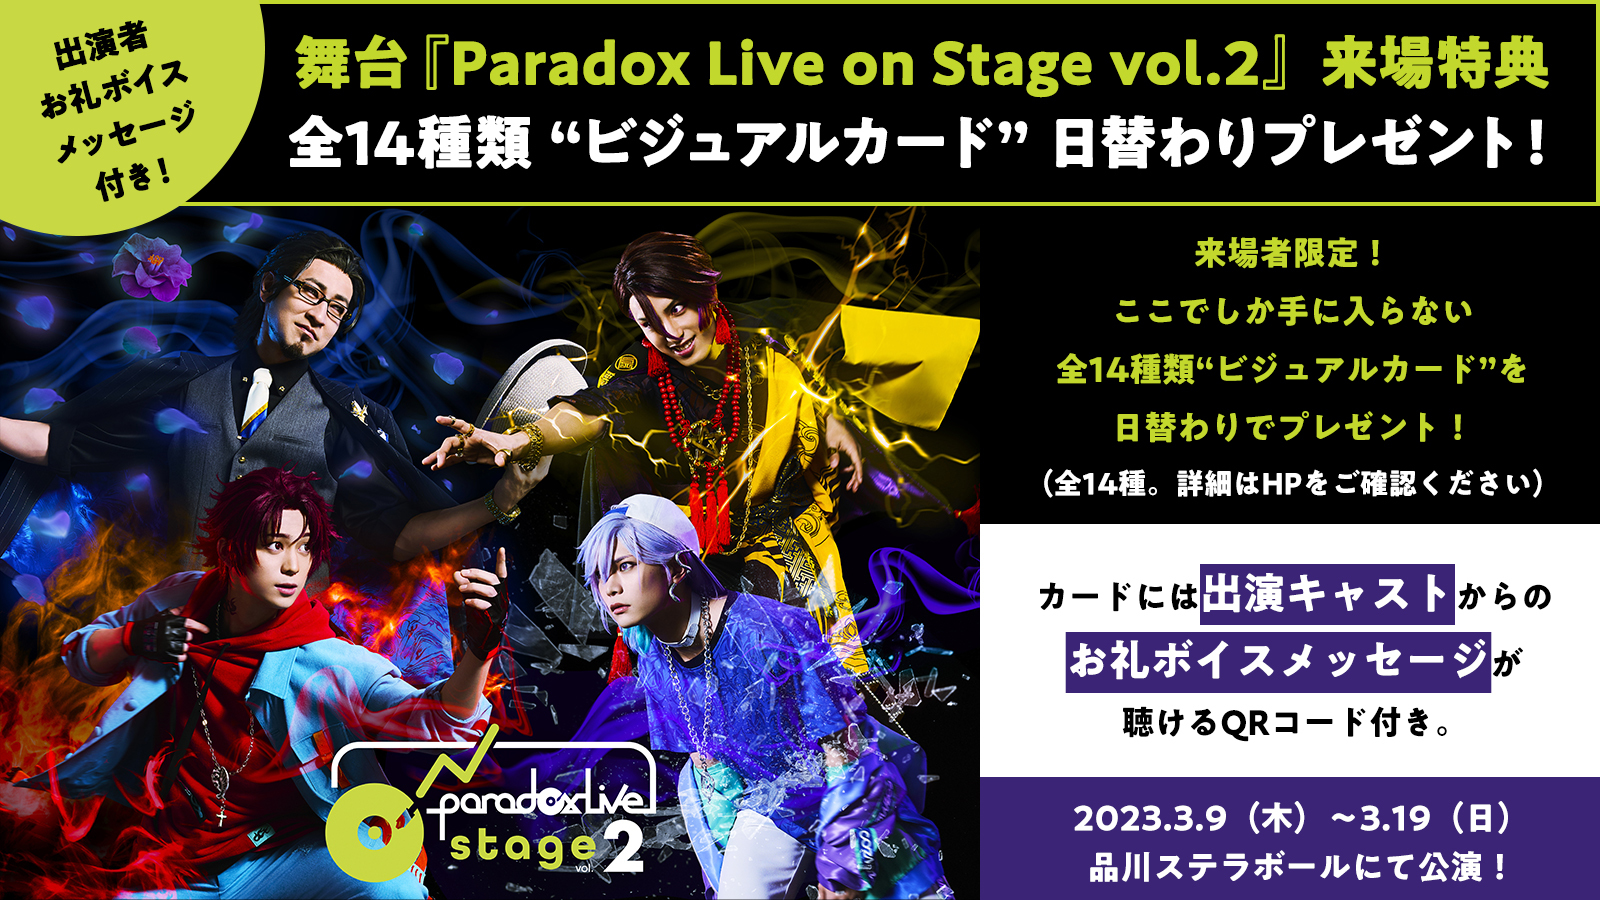 舞台「Paradox Live on Stage vol.2」Blu-ray